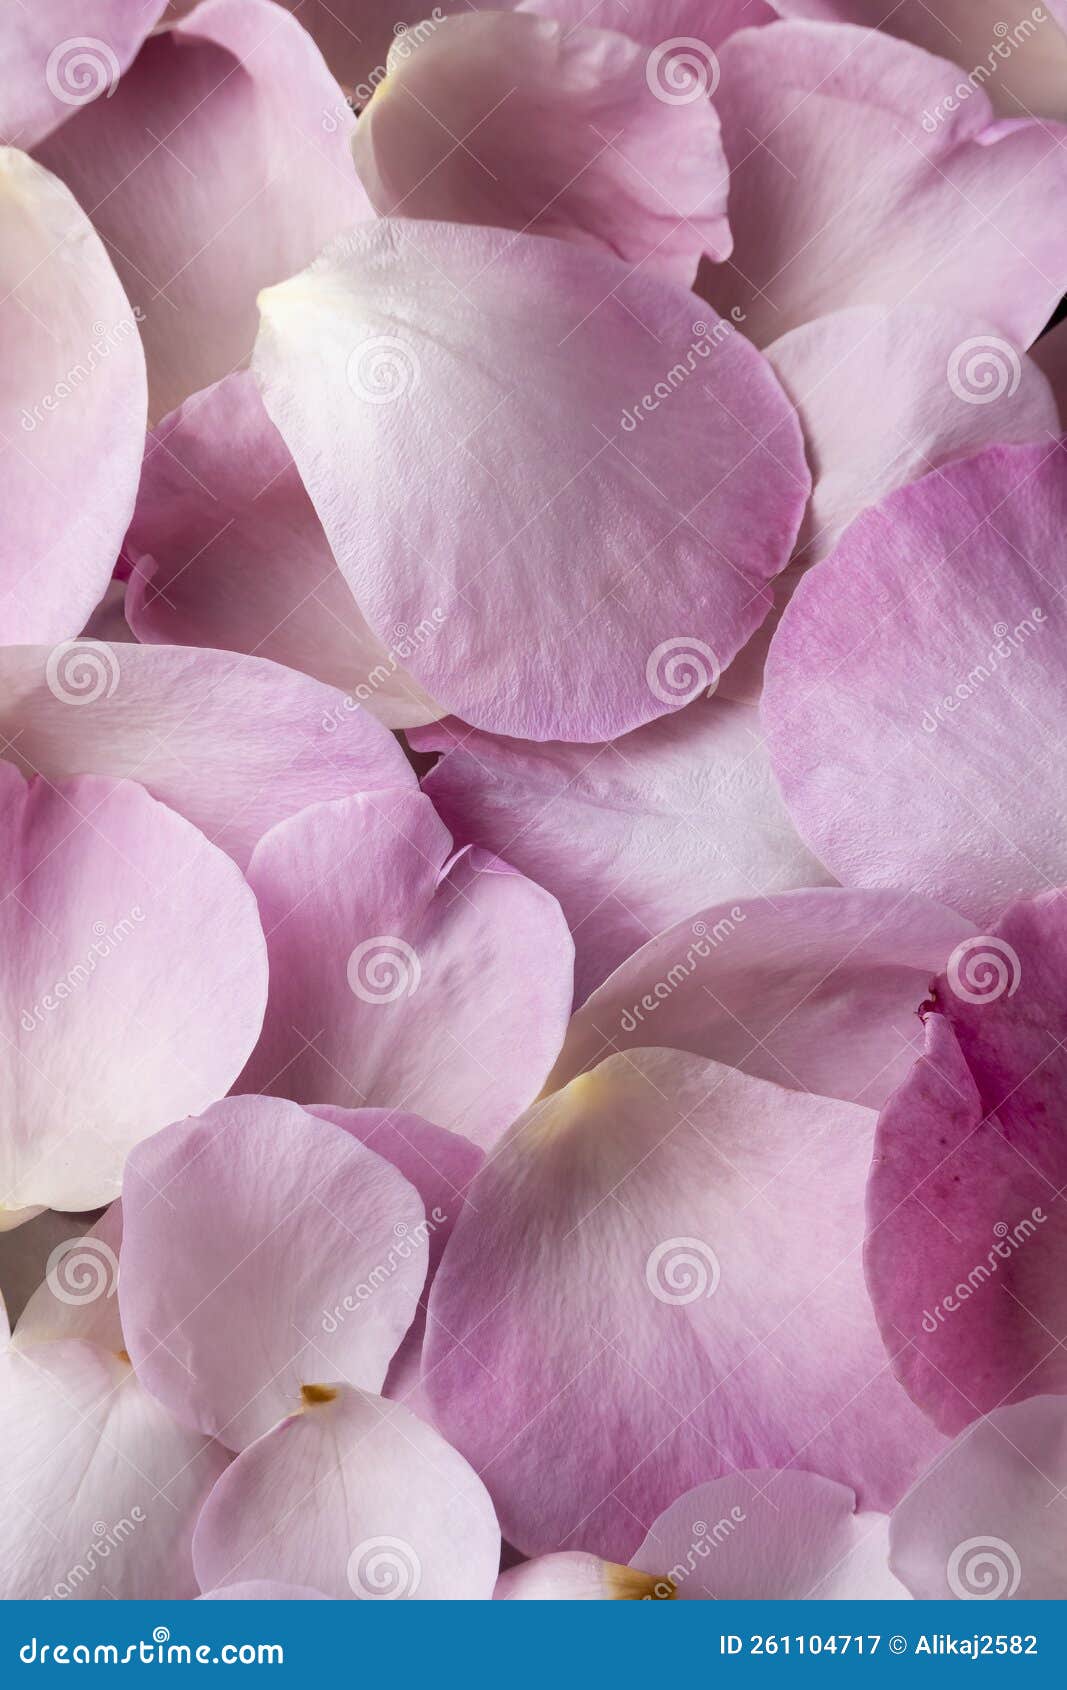 close up view of rose petals, floral background, romantic concept